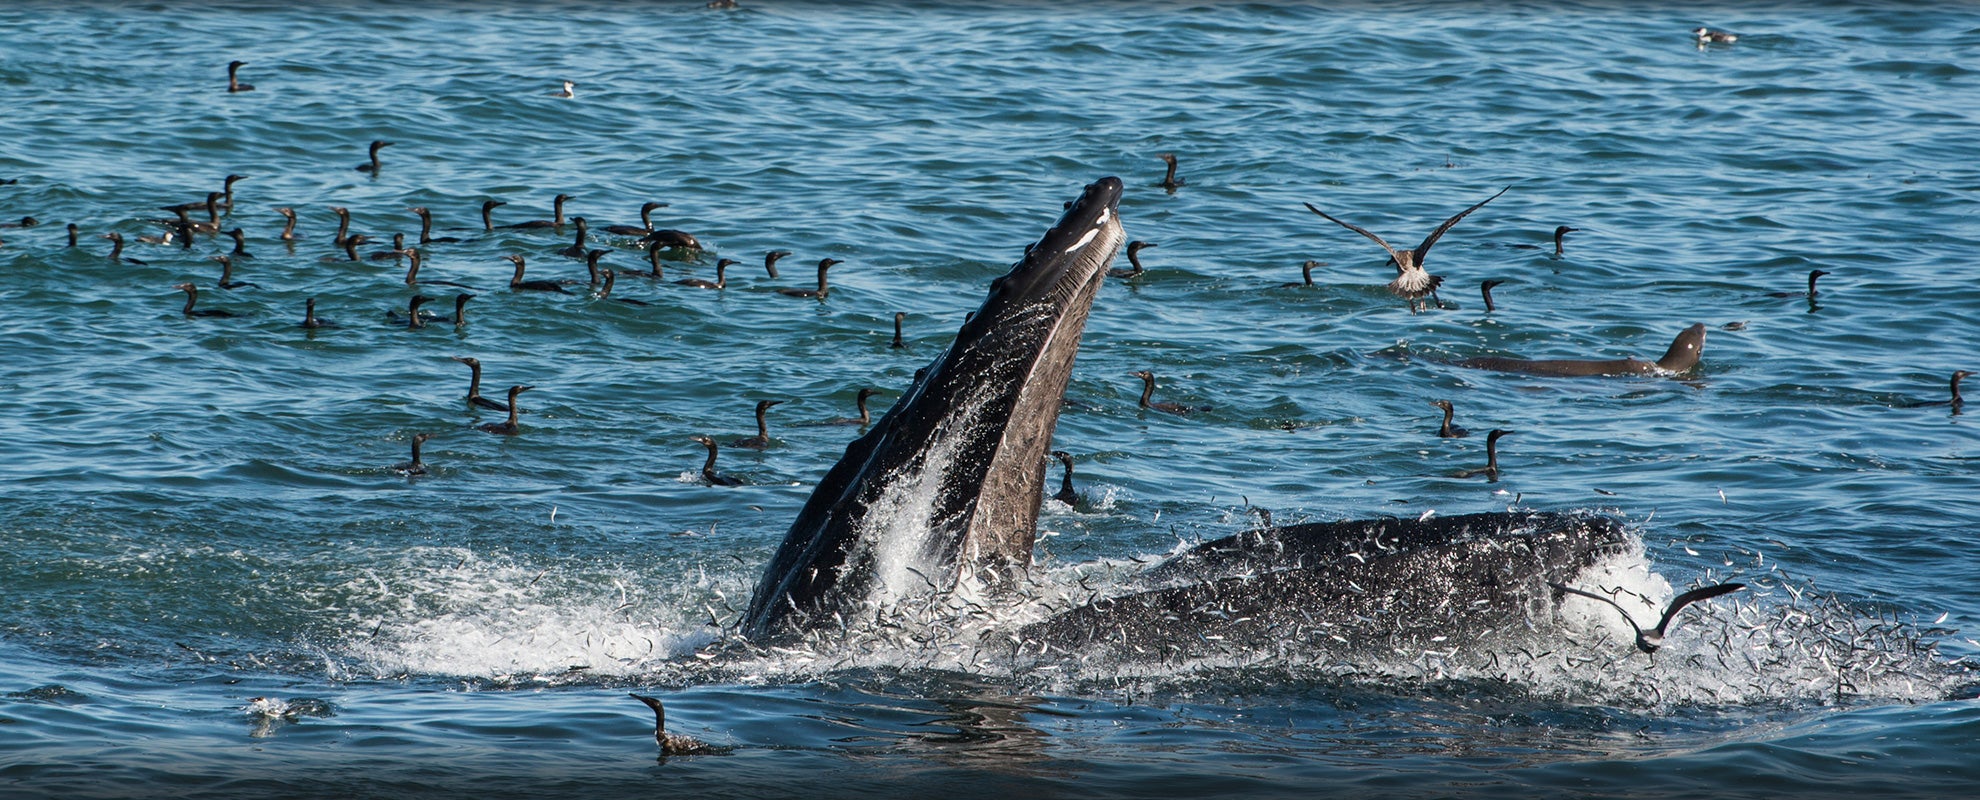 Humpback whale lunge feeding in an anchovy-rich cove, off the coast of Santa Cruz, California.